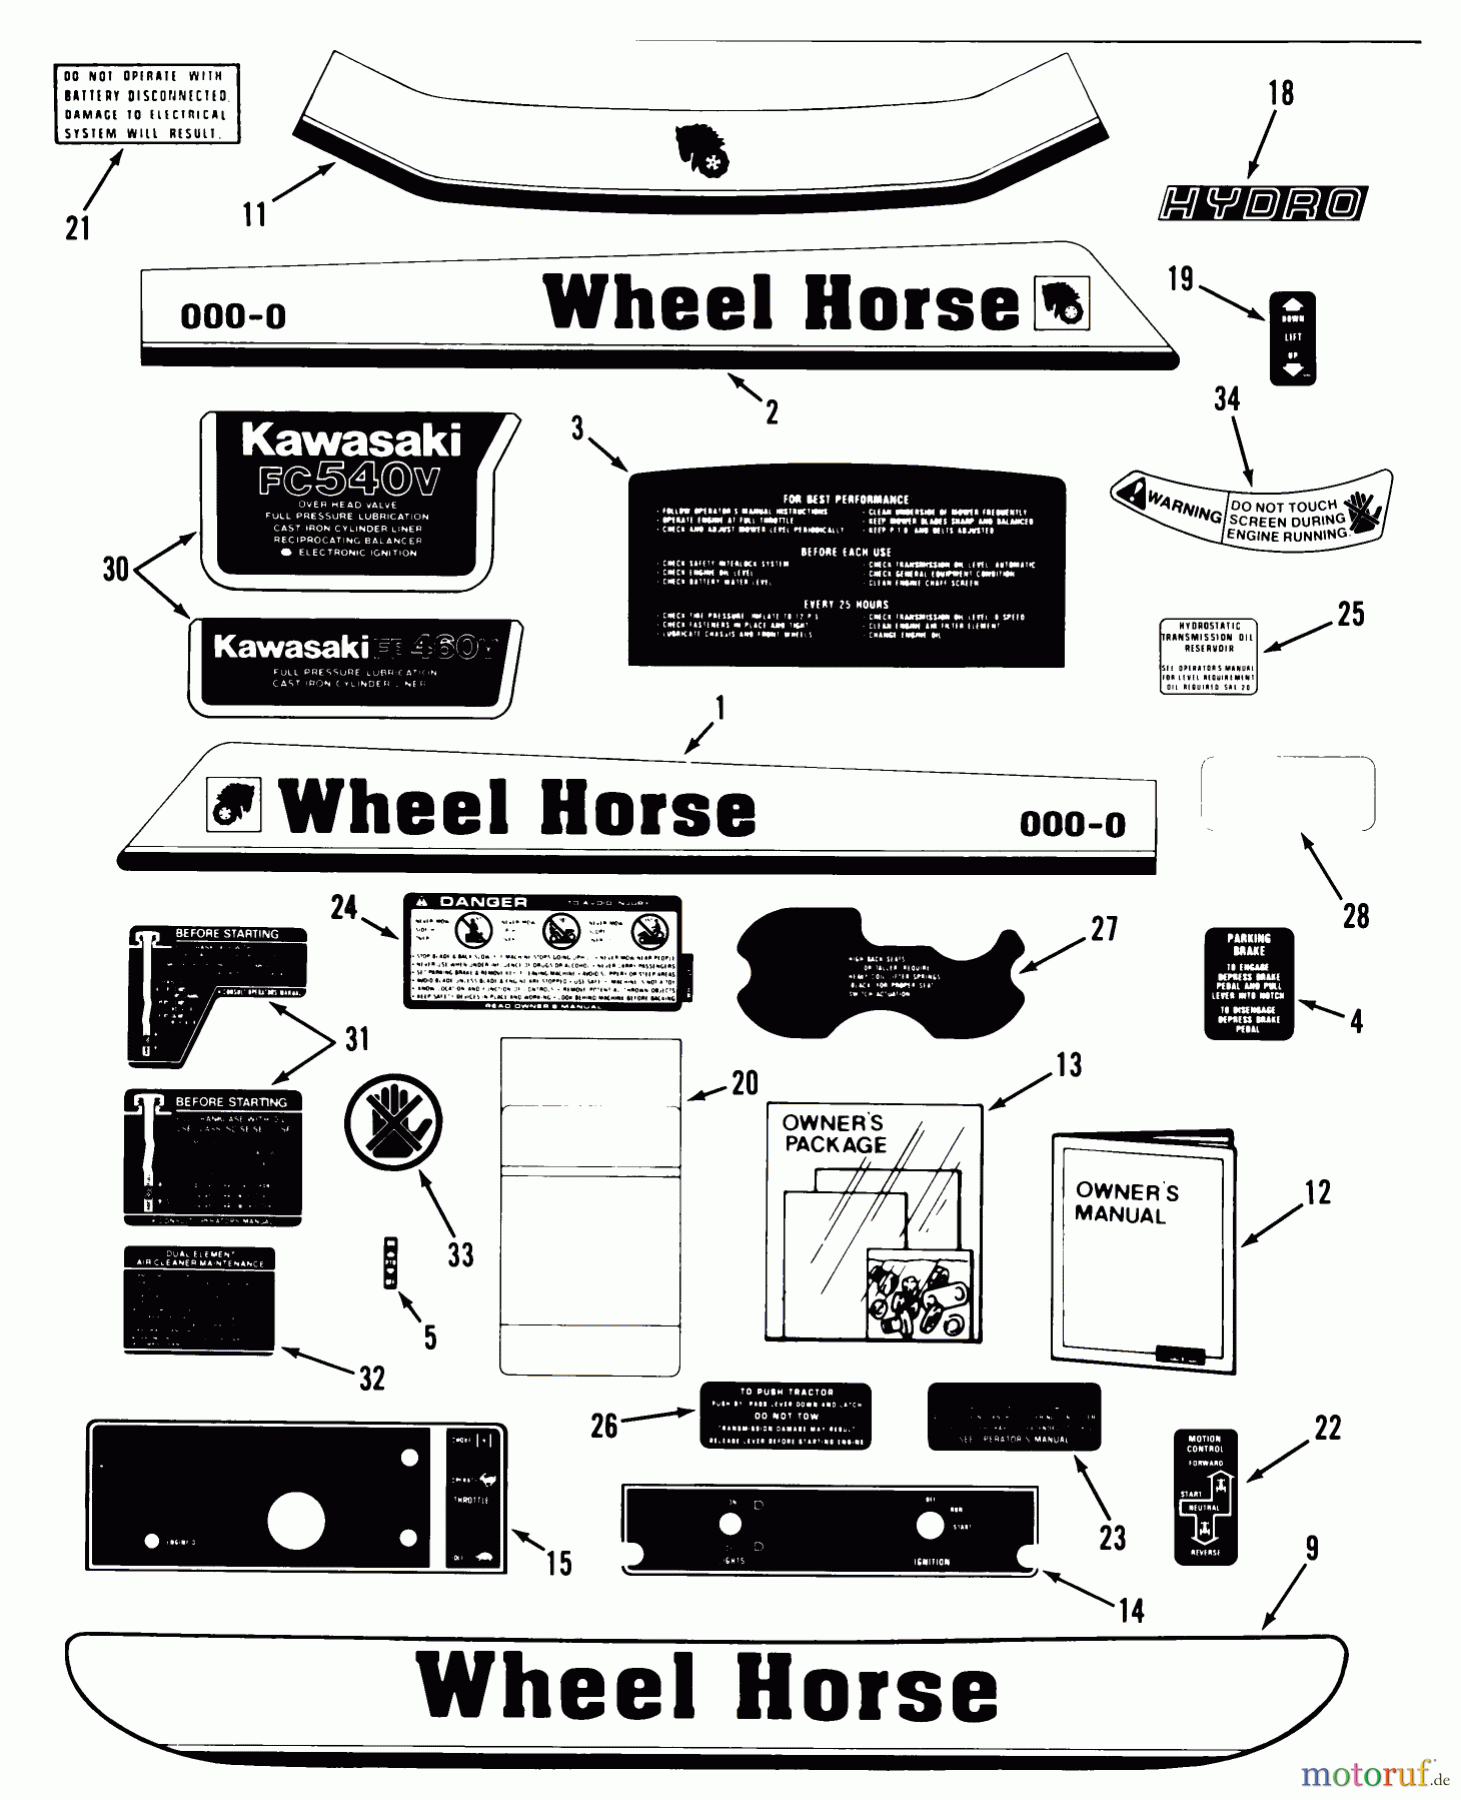  Toro Neu Mowers, Lawn & Garden Tractor Seite 1 22-17KE02 (257-H) - Toro 257-H Tractor, 1989 DECALS, MISCELLANEOUS